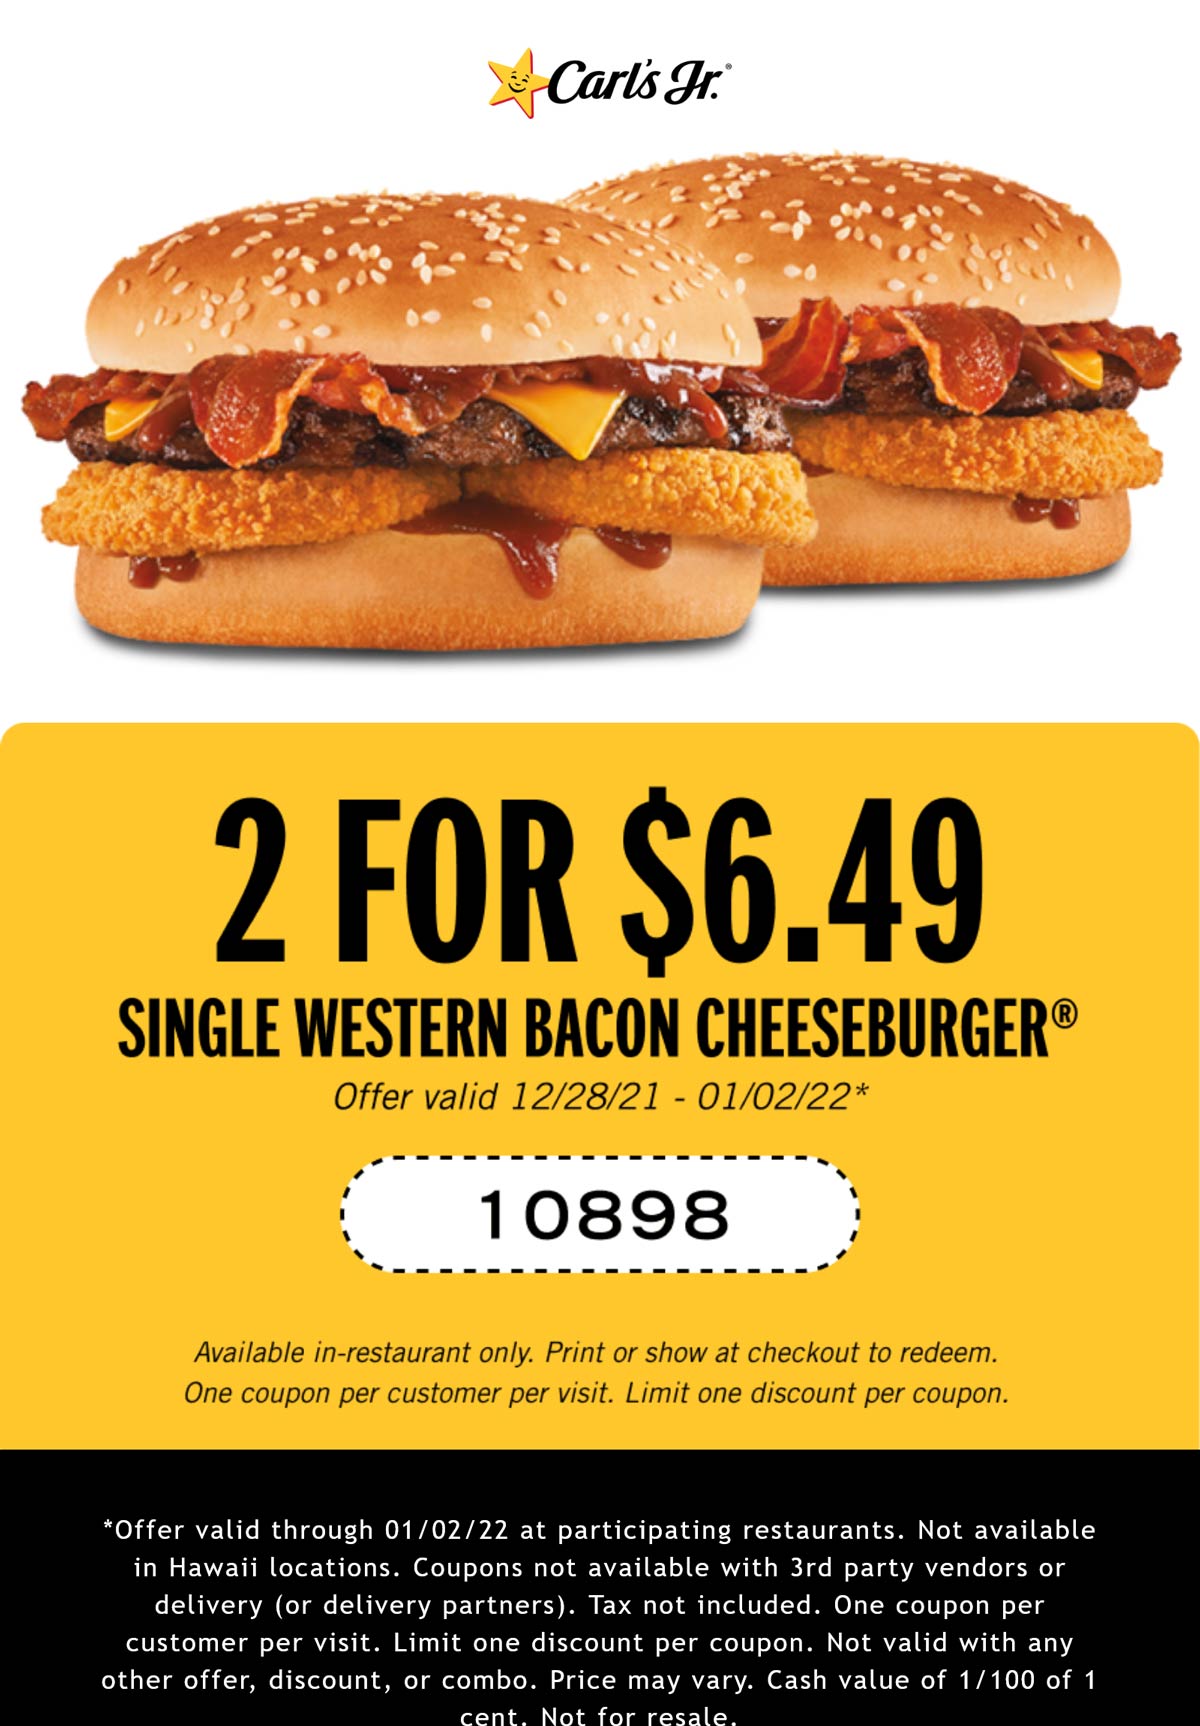 Carls Jr restaurants Coupon  2 western bacon cheeseburgers for $6.49 at Carls Jr restaurants #carlsjr 